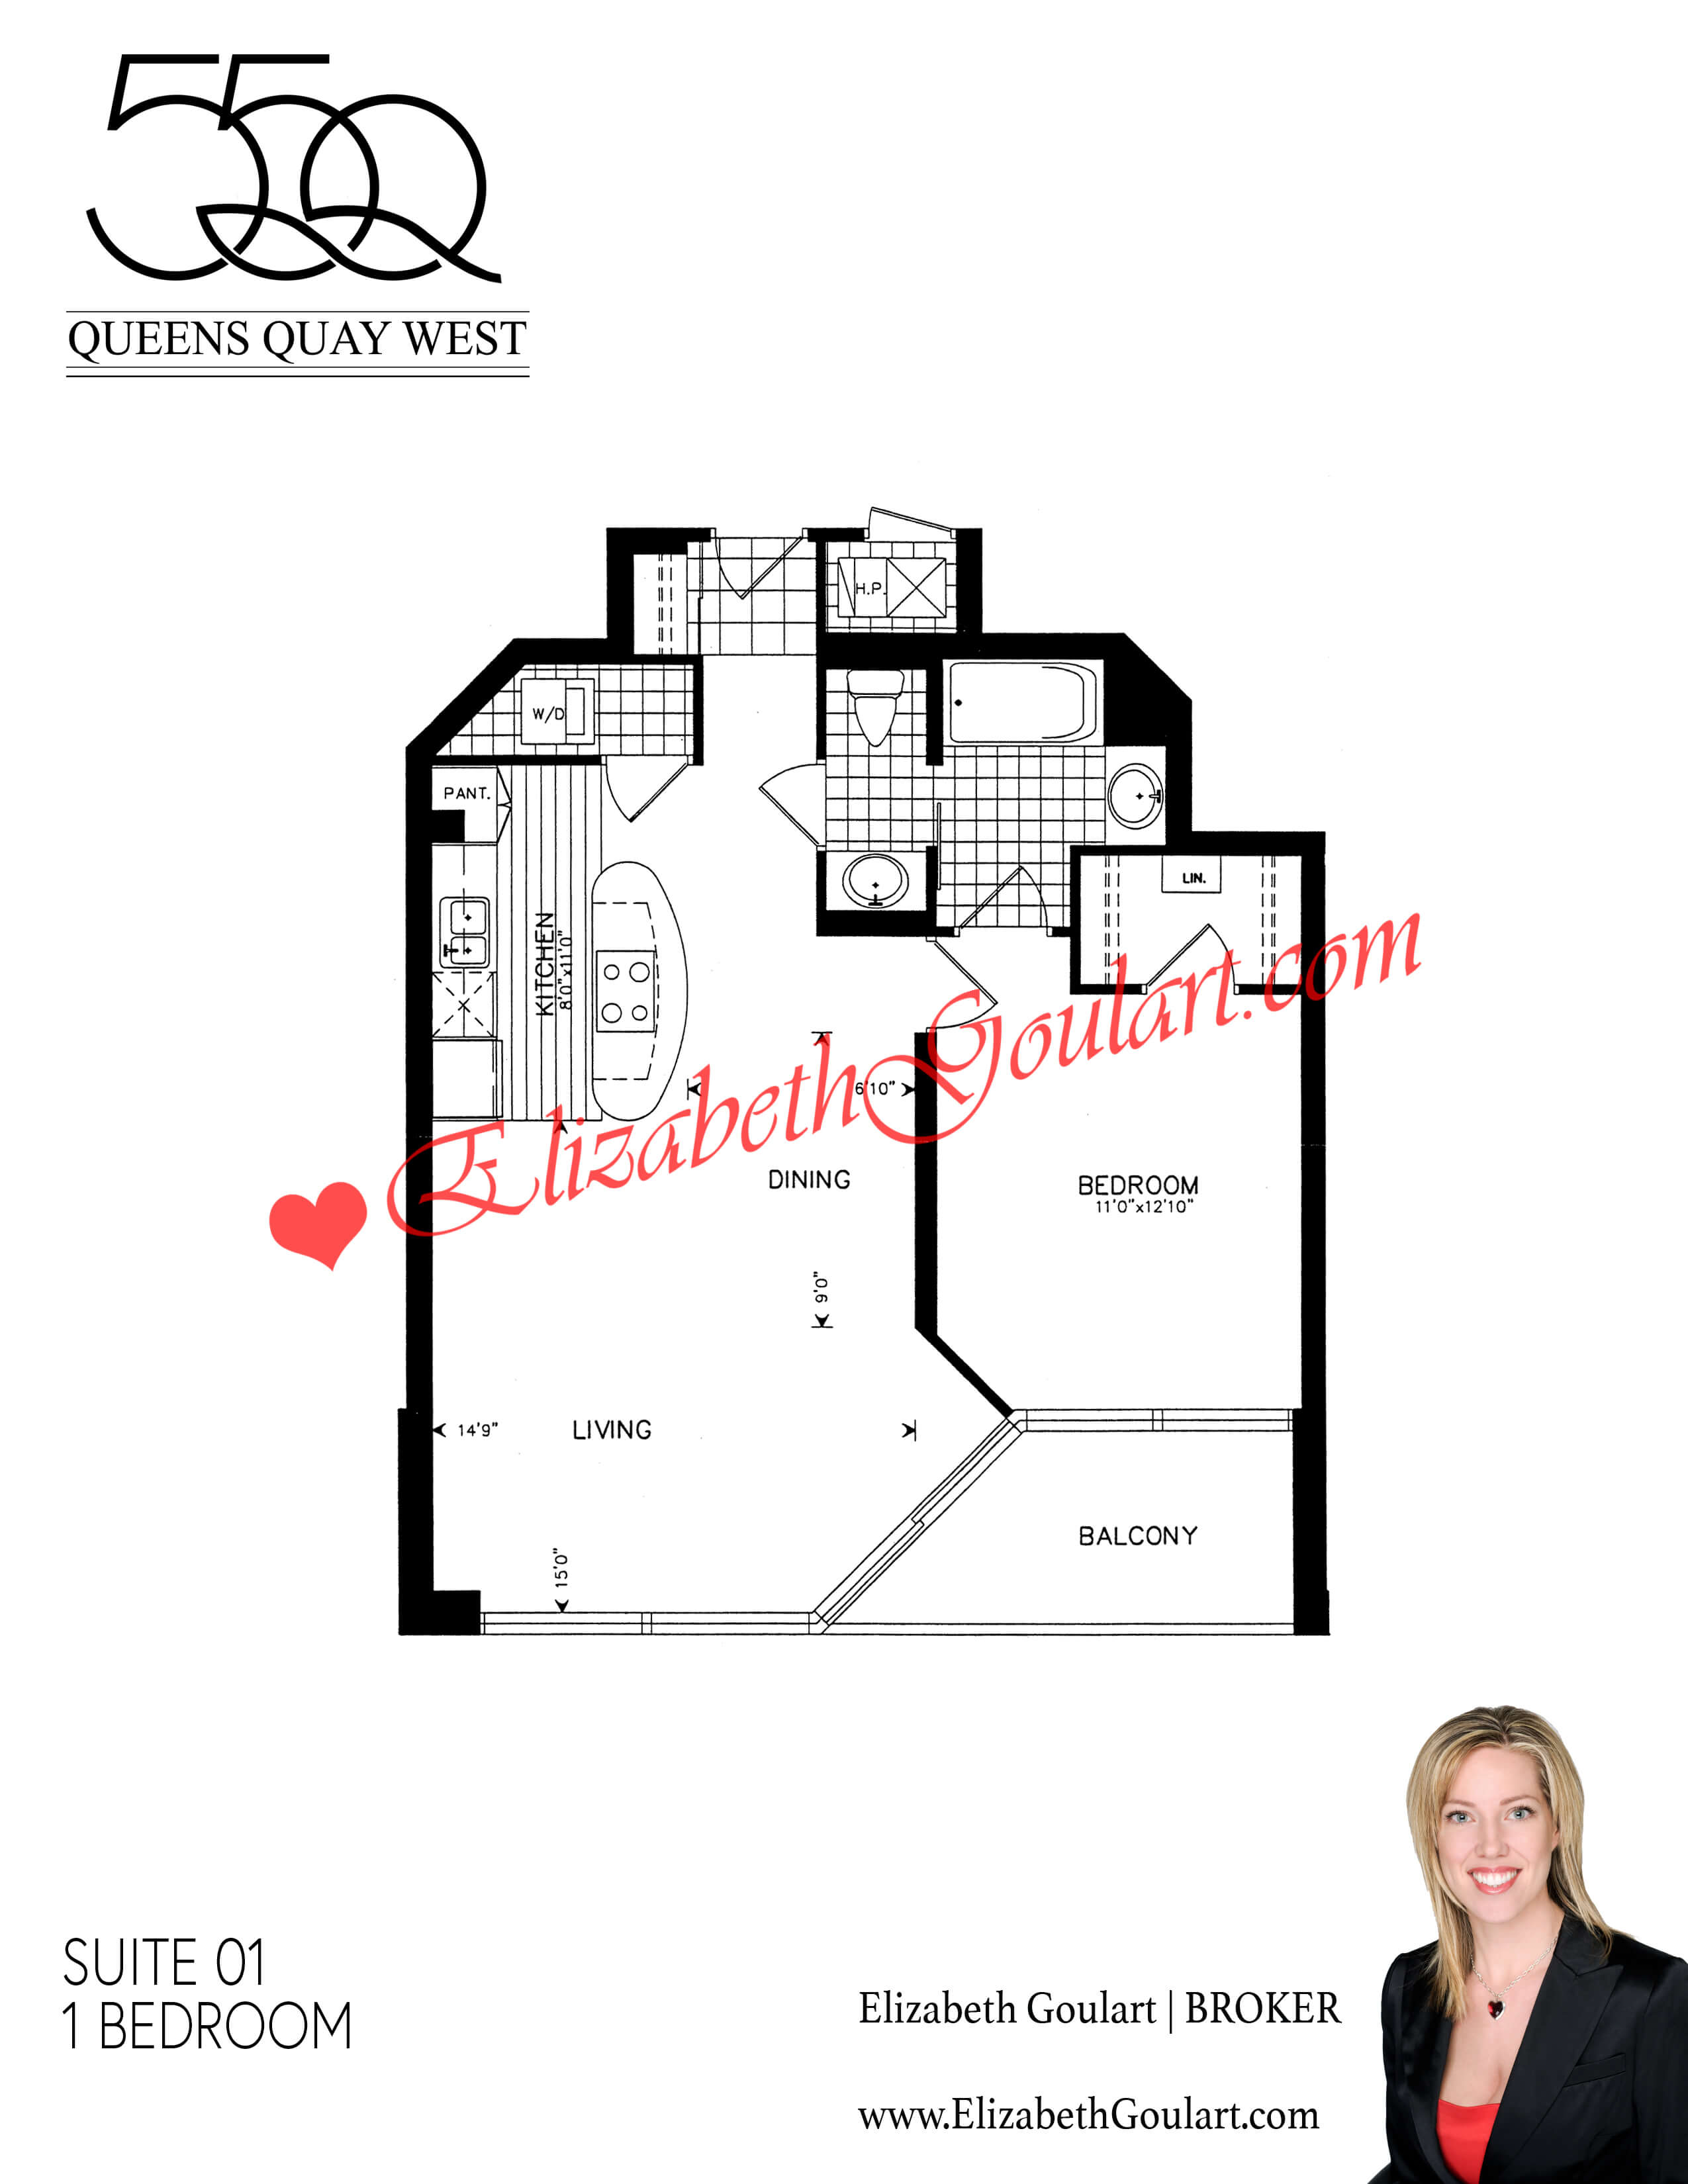 550 Queens Quay West For Sale / Rent Elizabeth Goulart